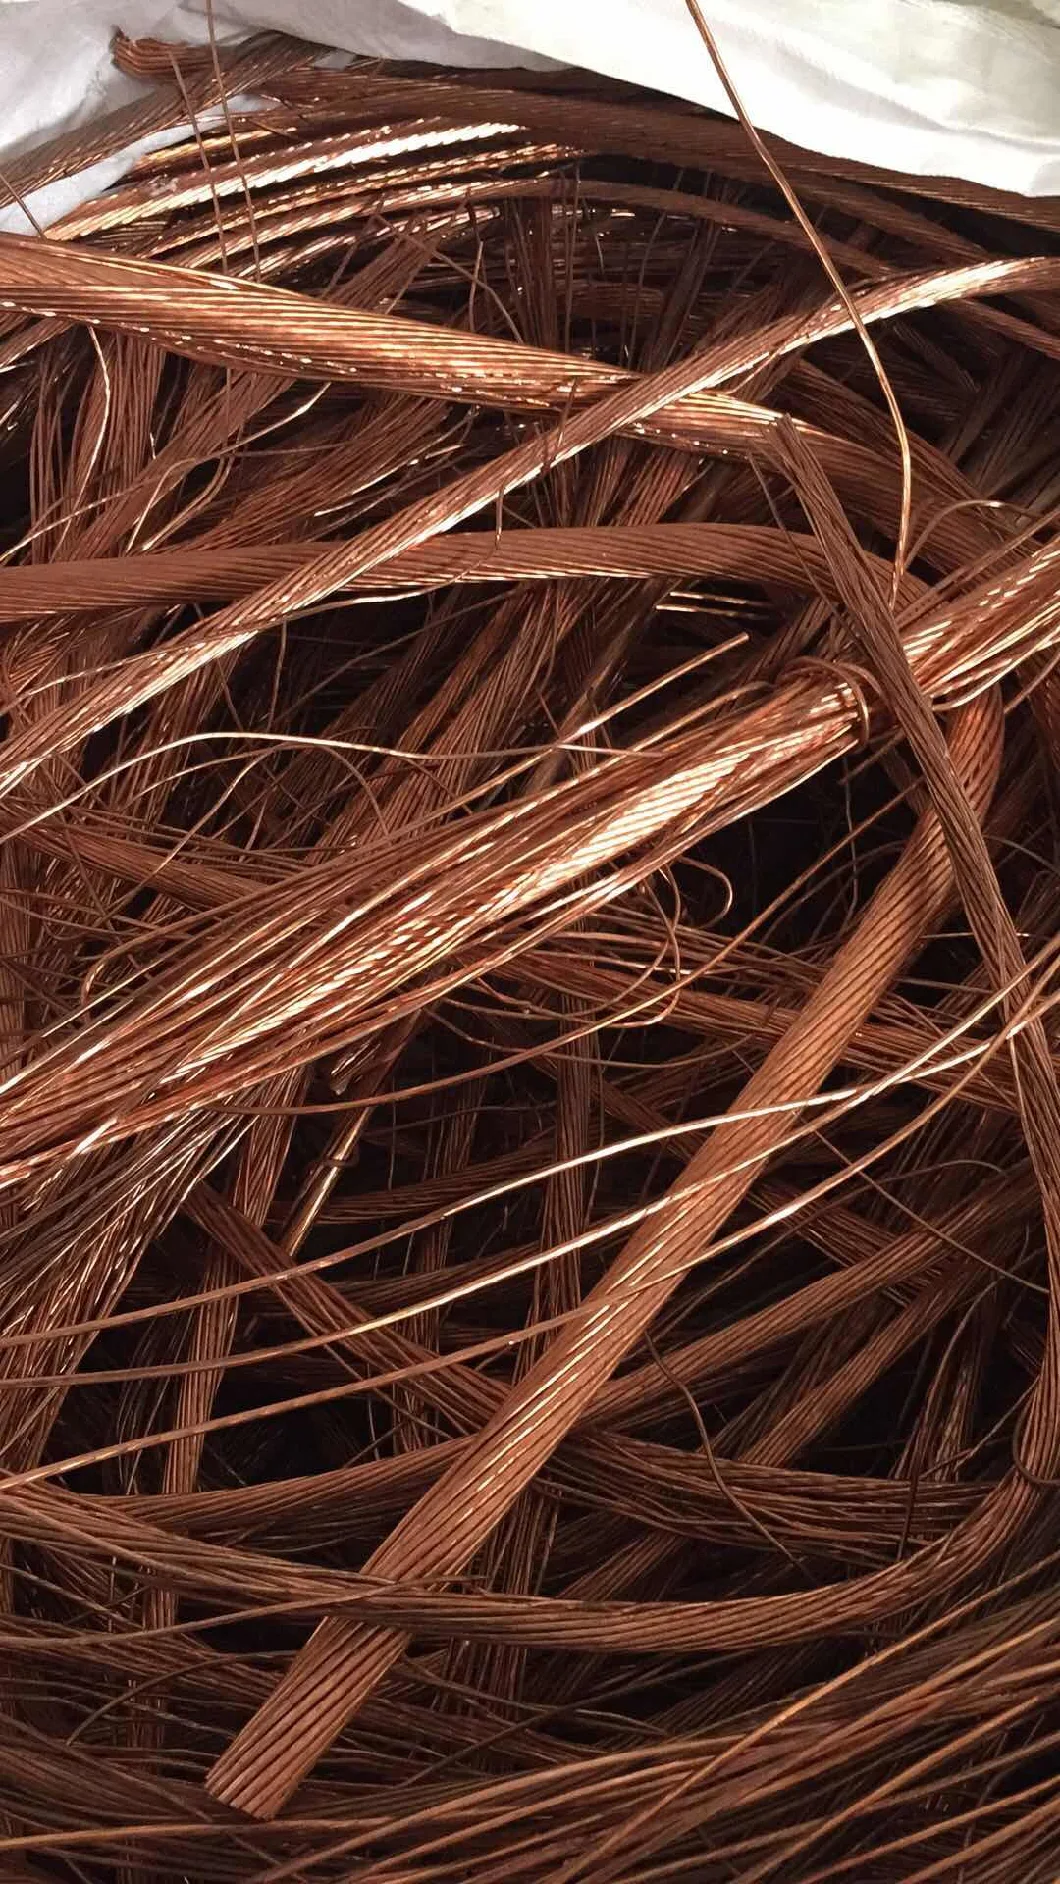 Bargain Sale Scrap Copper Cable Copper Products Copper